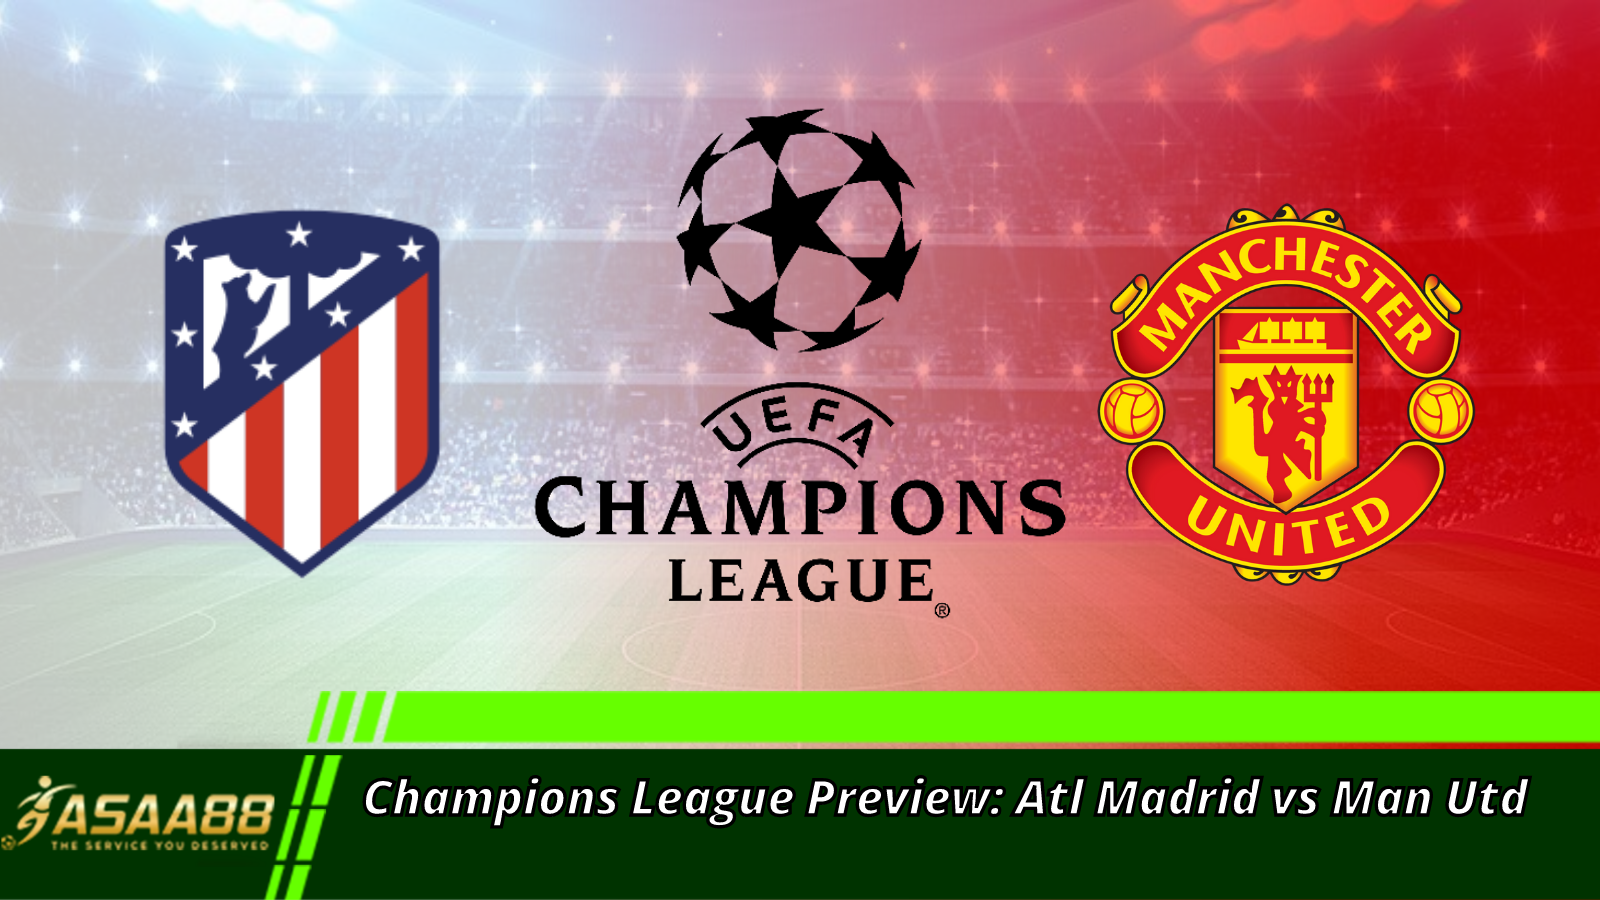 Champions League Preview: Atl Madrid vs Man Utd